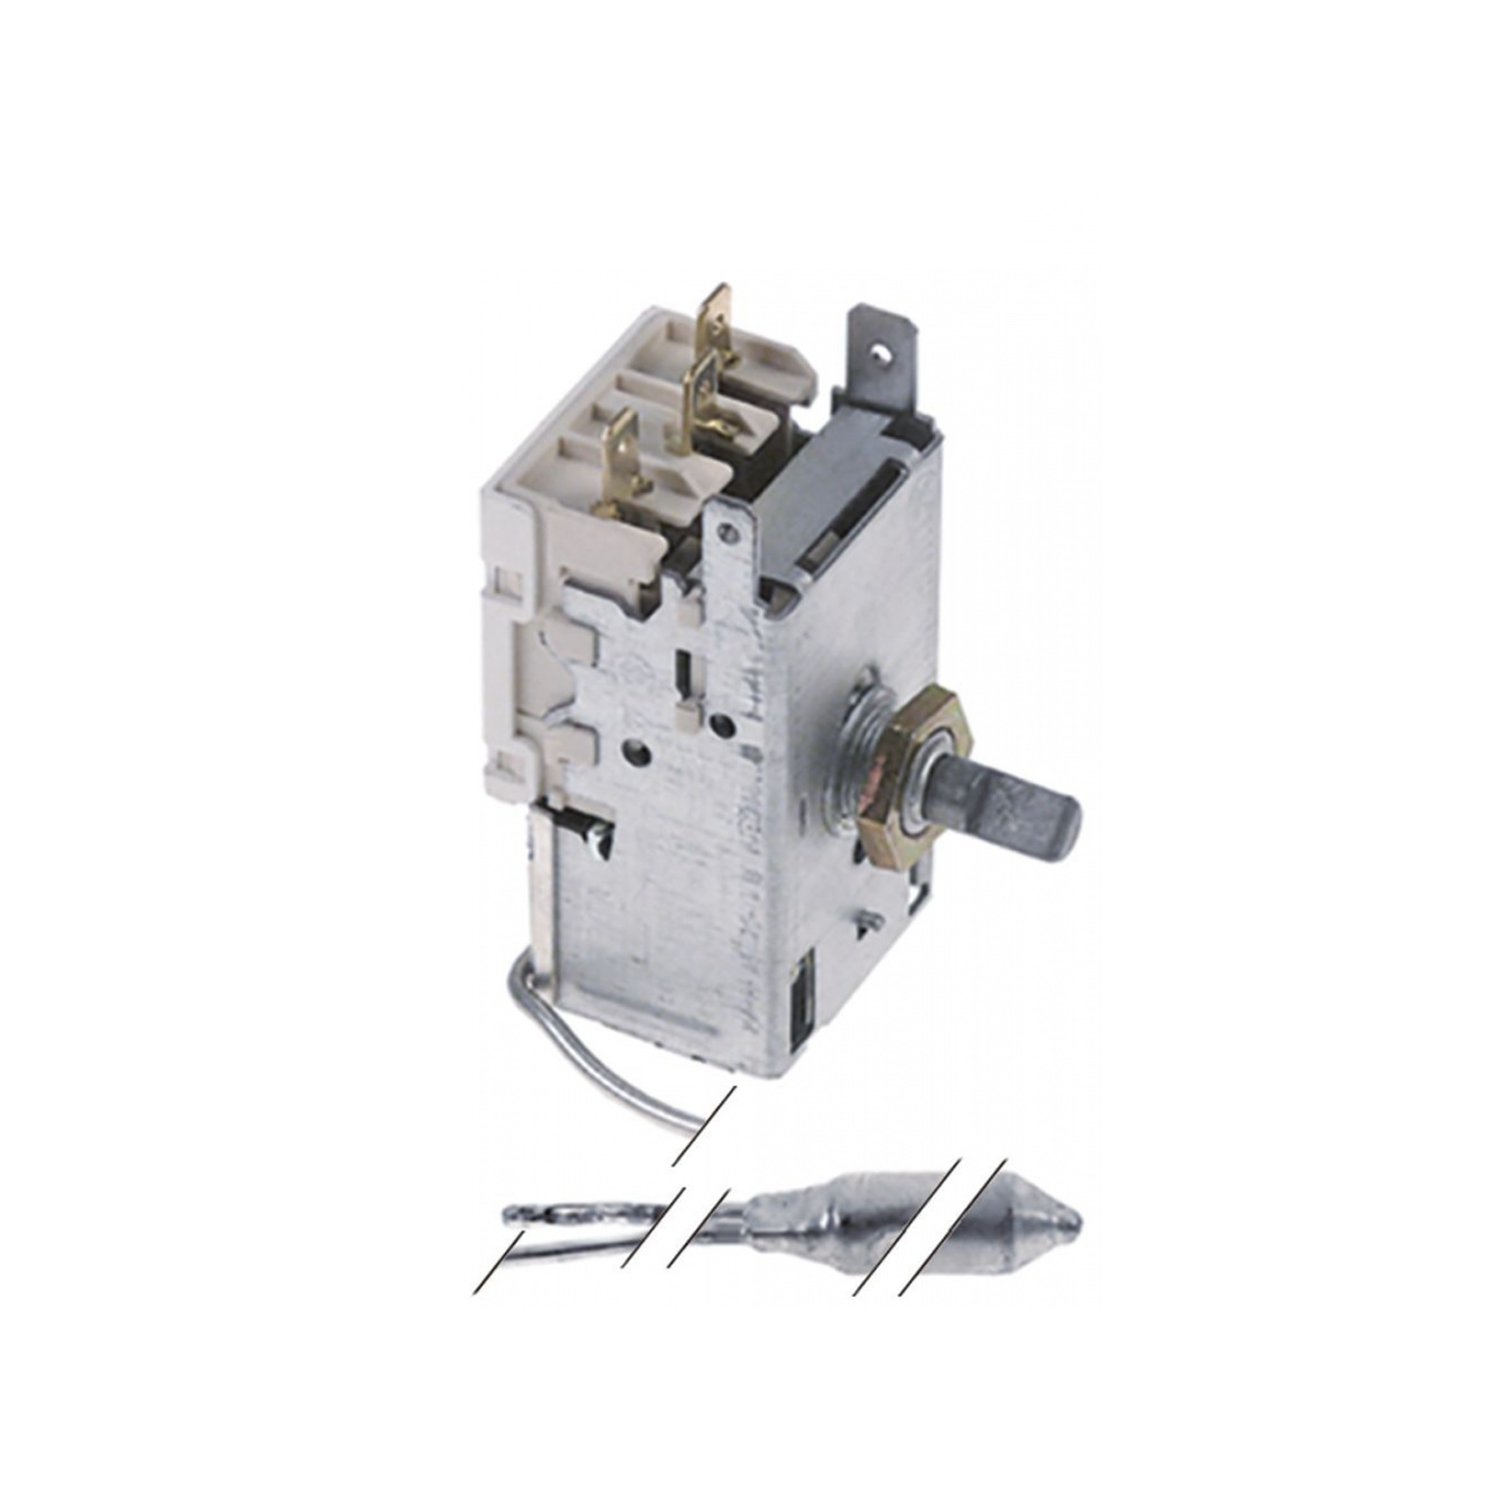 Thermostat RANCO K57-L2865 Capillary tube 1950mm Temperature range -40 to + 40 ° C Probe ø9,5x107mm